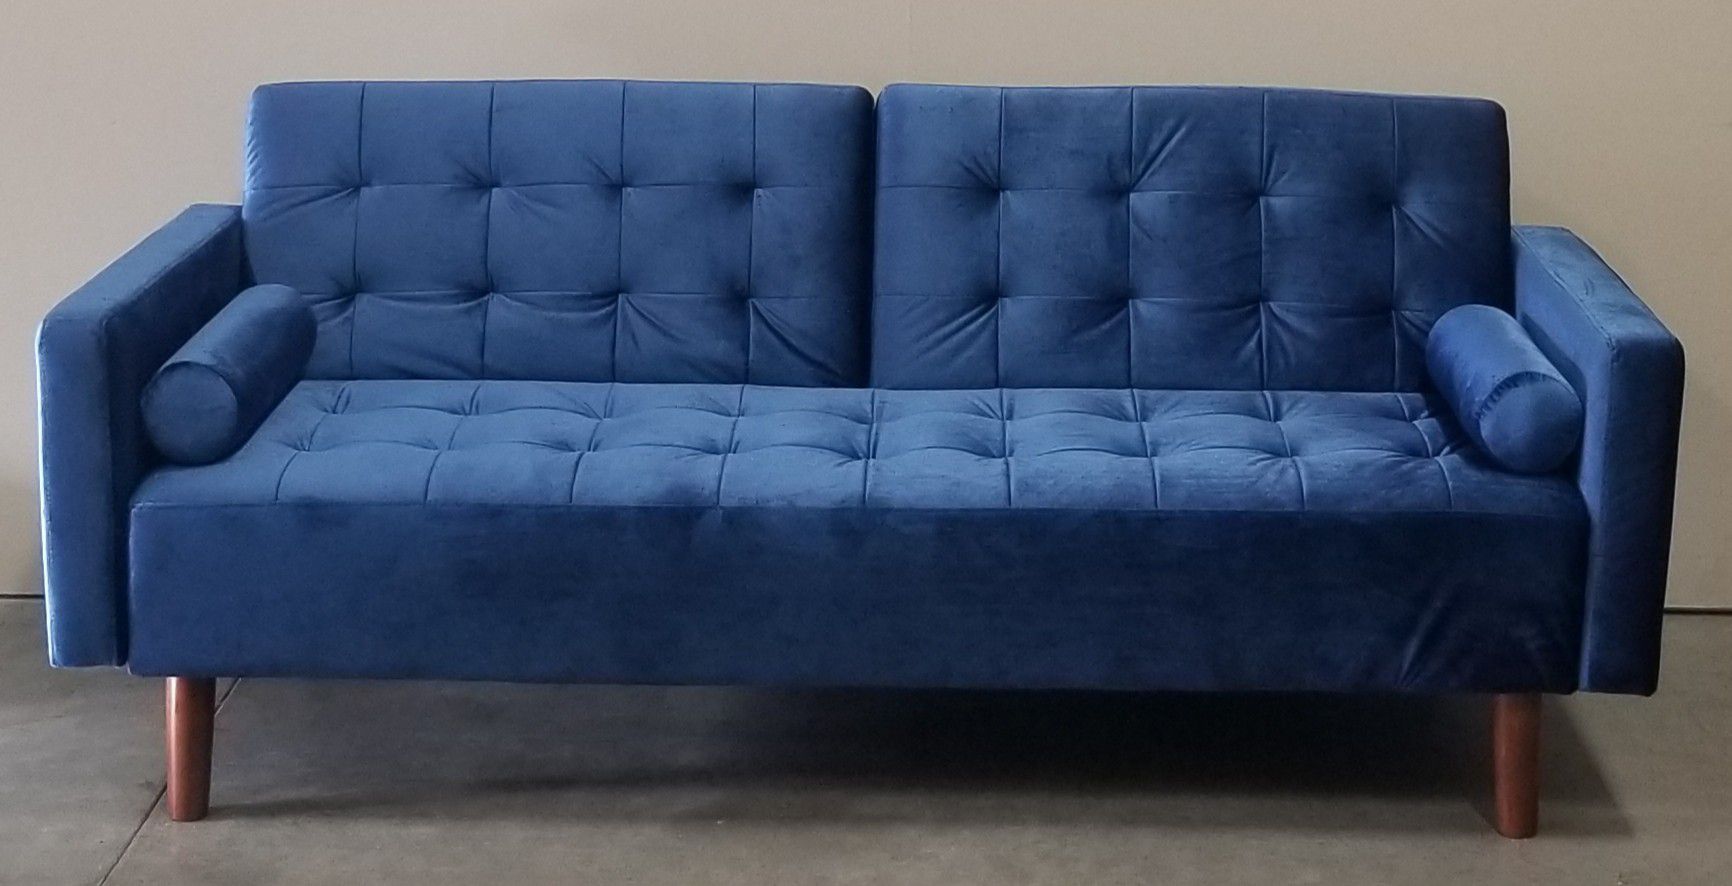 New in box Blue Velvet Mid-Century Modern Sofa Bed Couch Futon